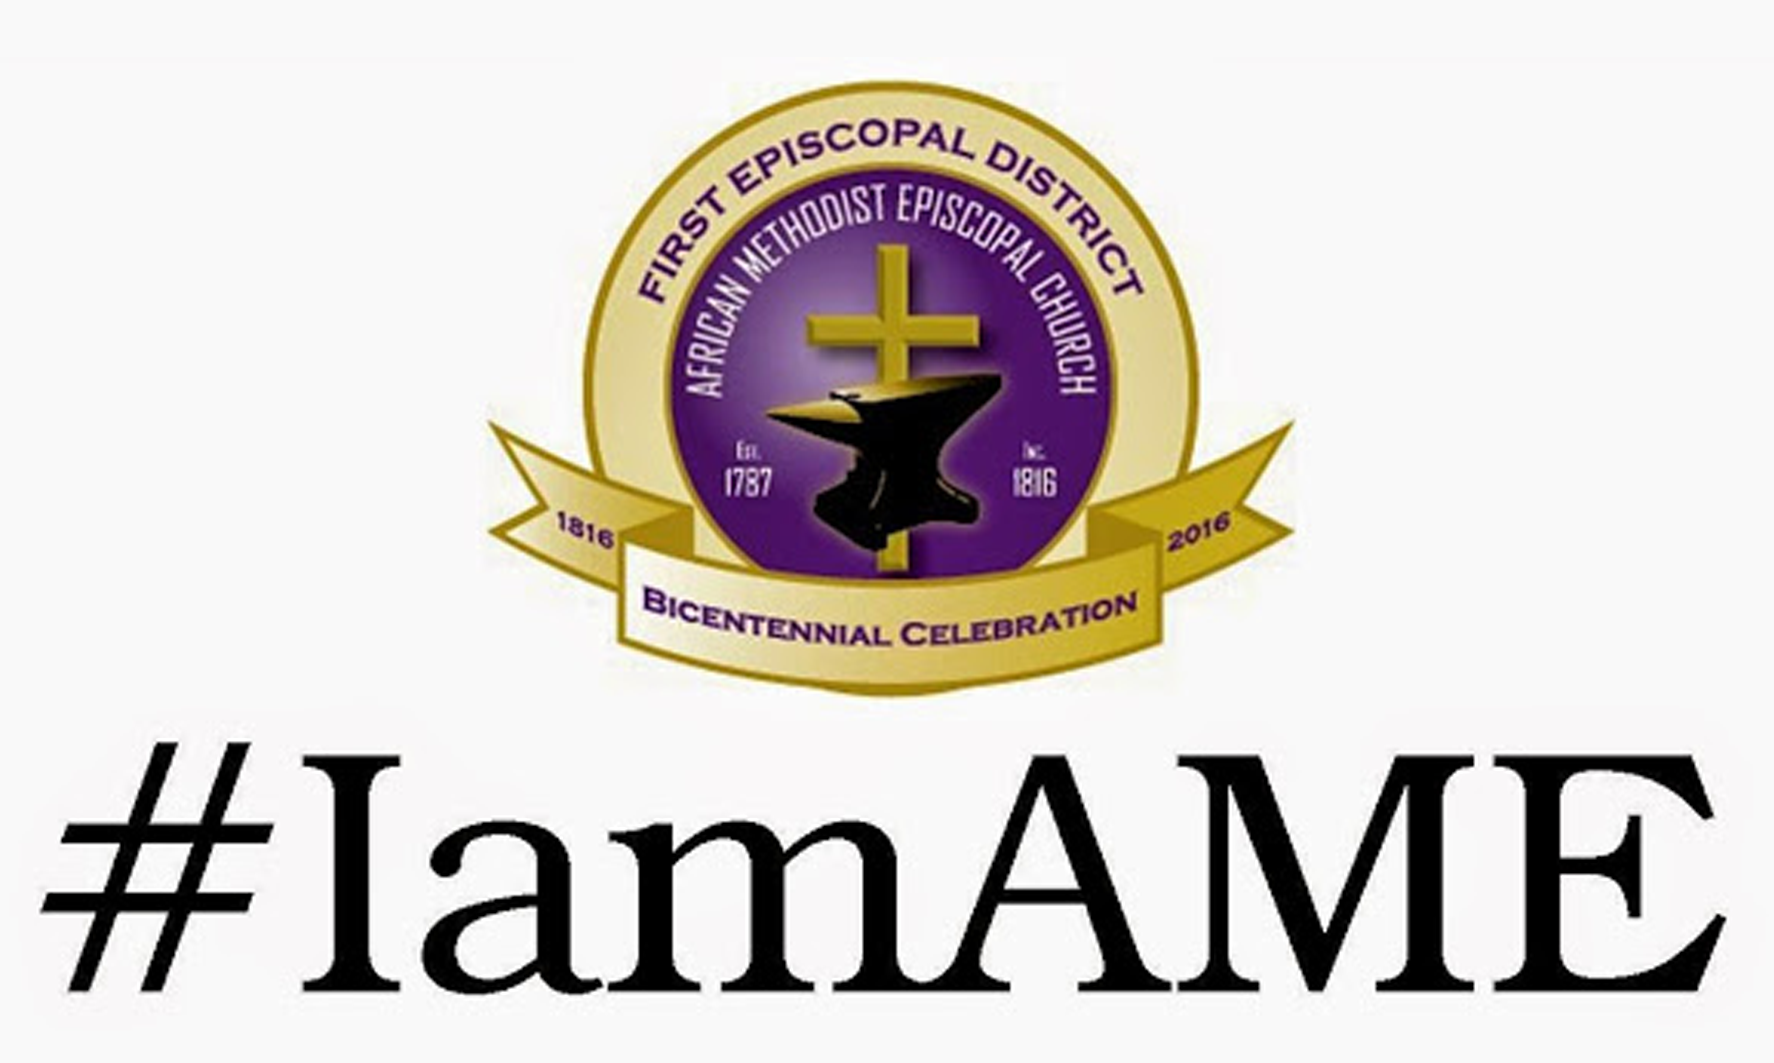 I am AME bicentennial celebration 2016 AME Church